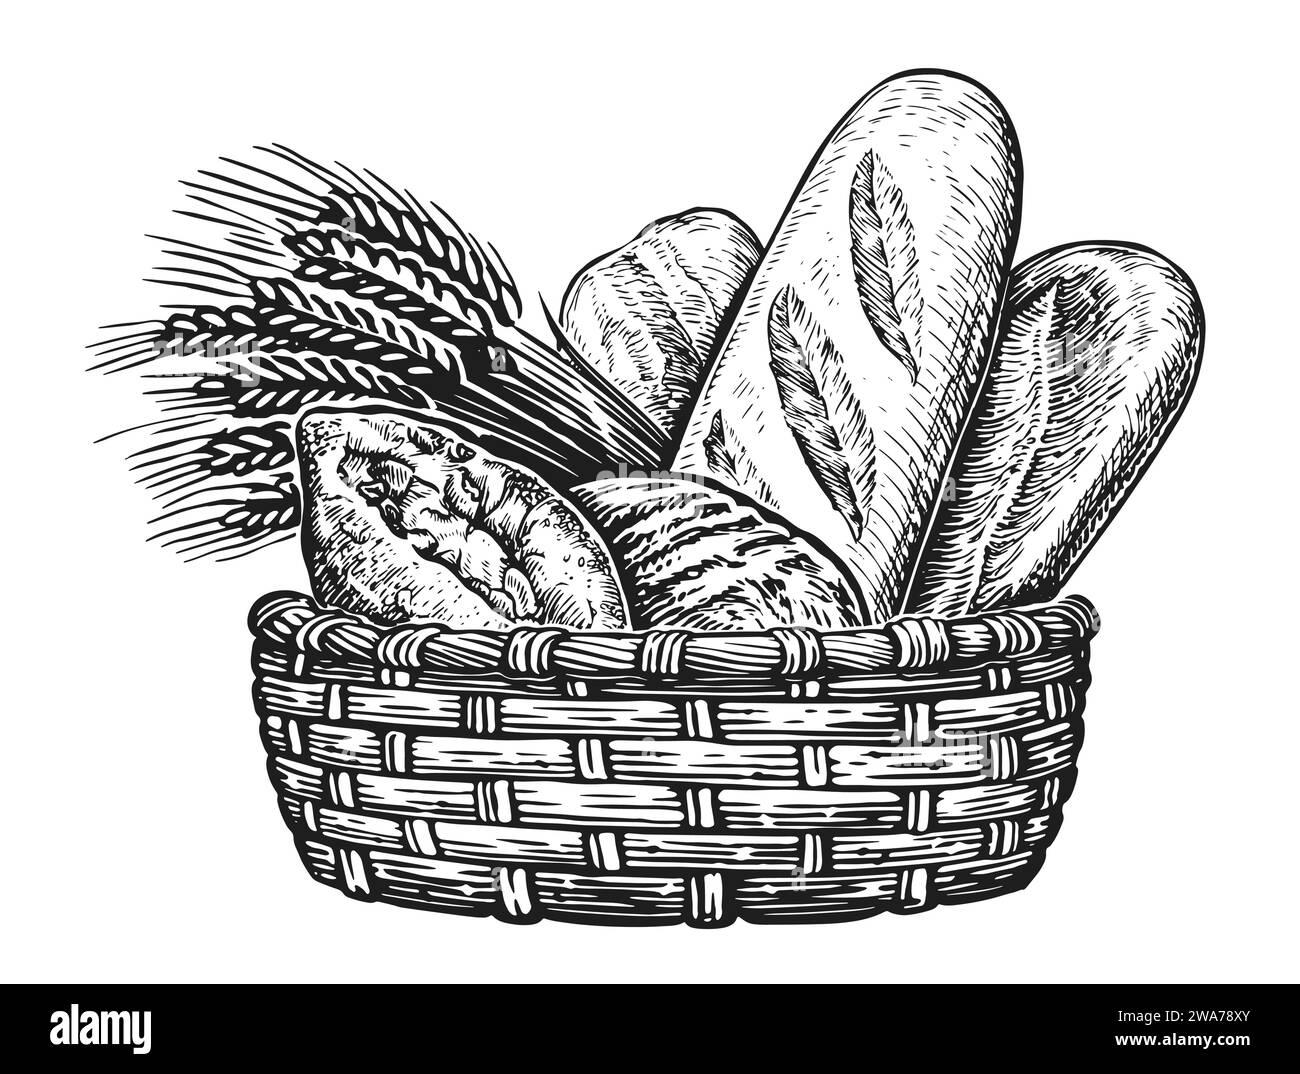 Korb voller Backwaren. Brot und Gebäck, Vintage-Skizze Illustration Stock Vektor